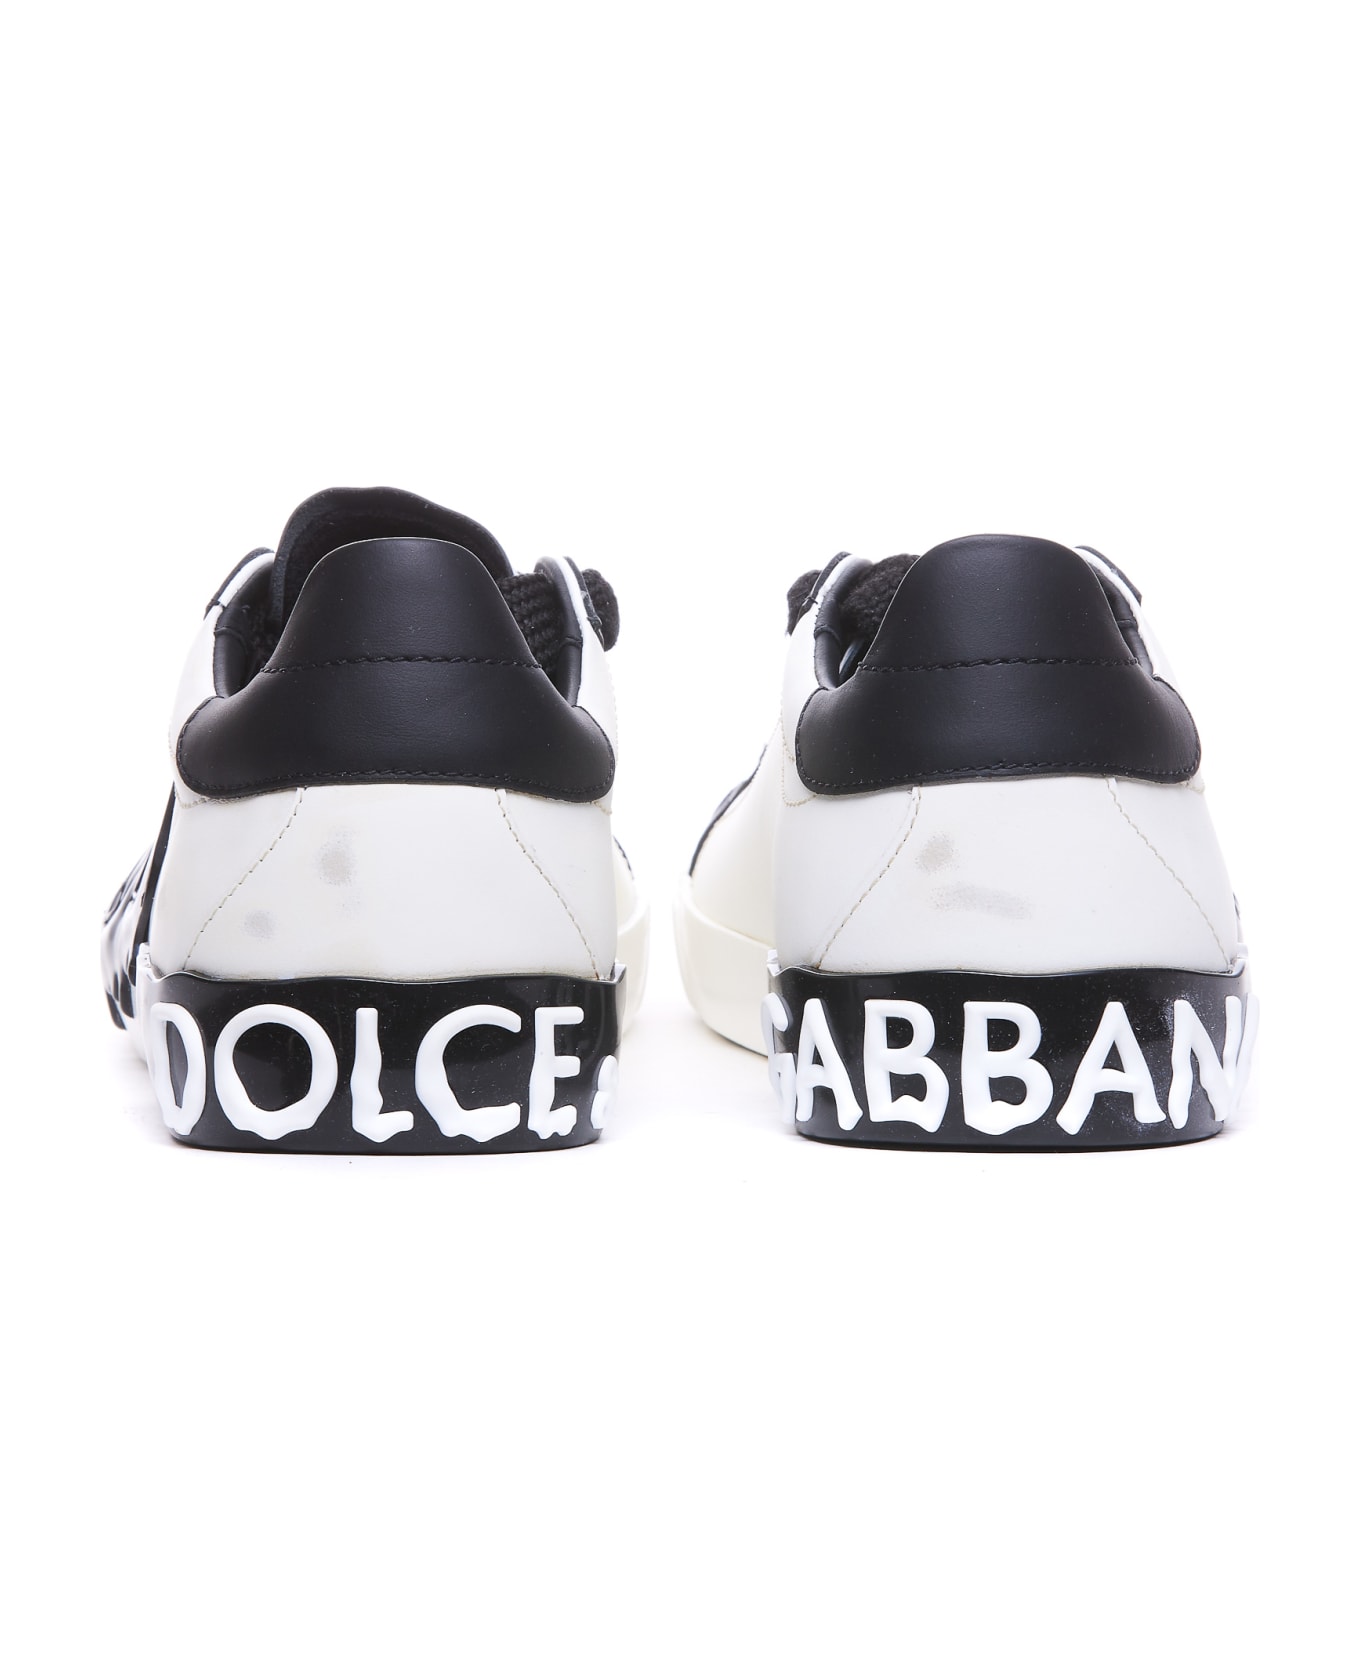 Dolce & Gabbana Portofino Sneakers - White